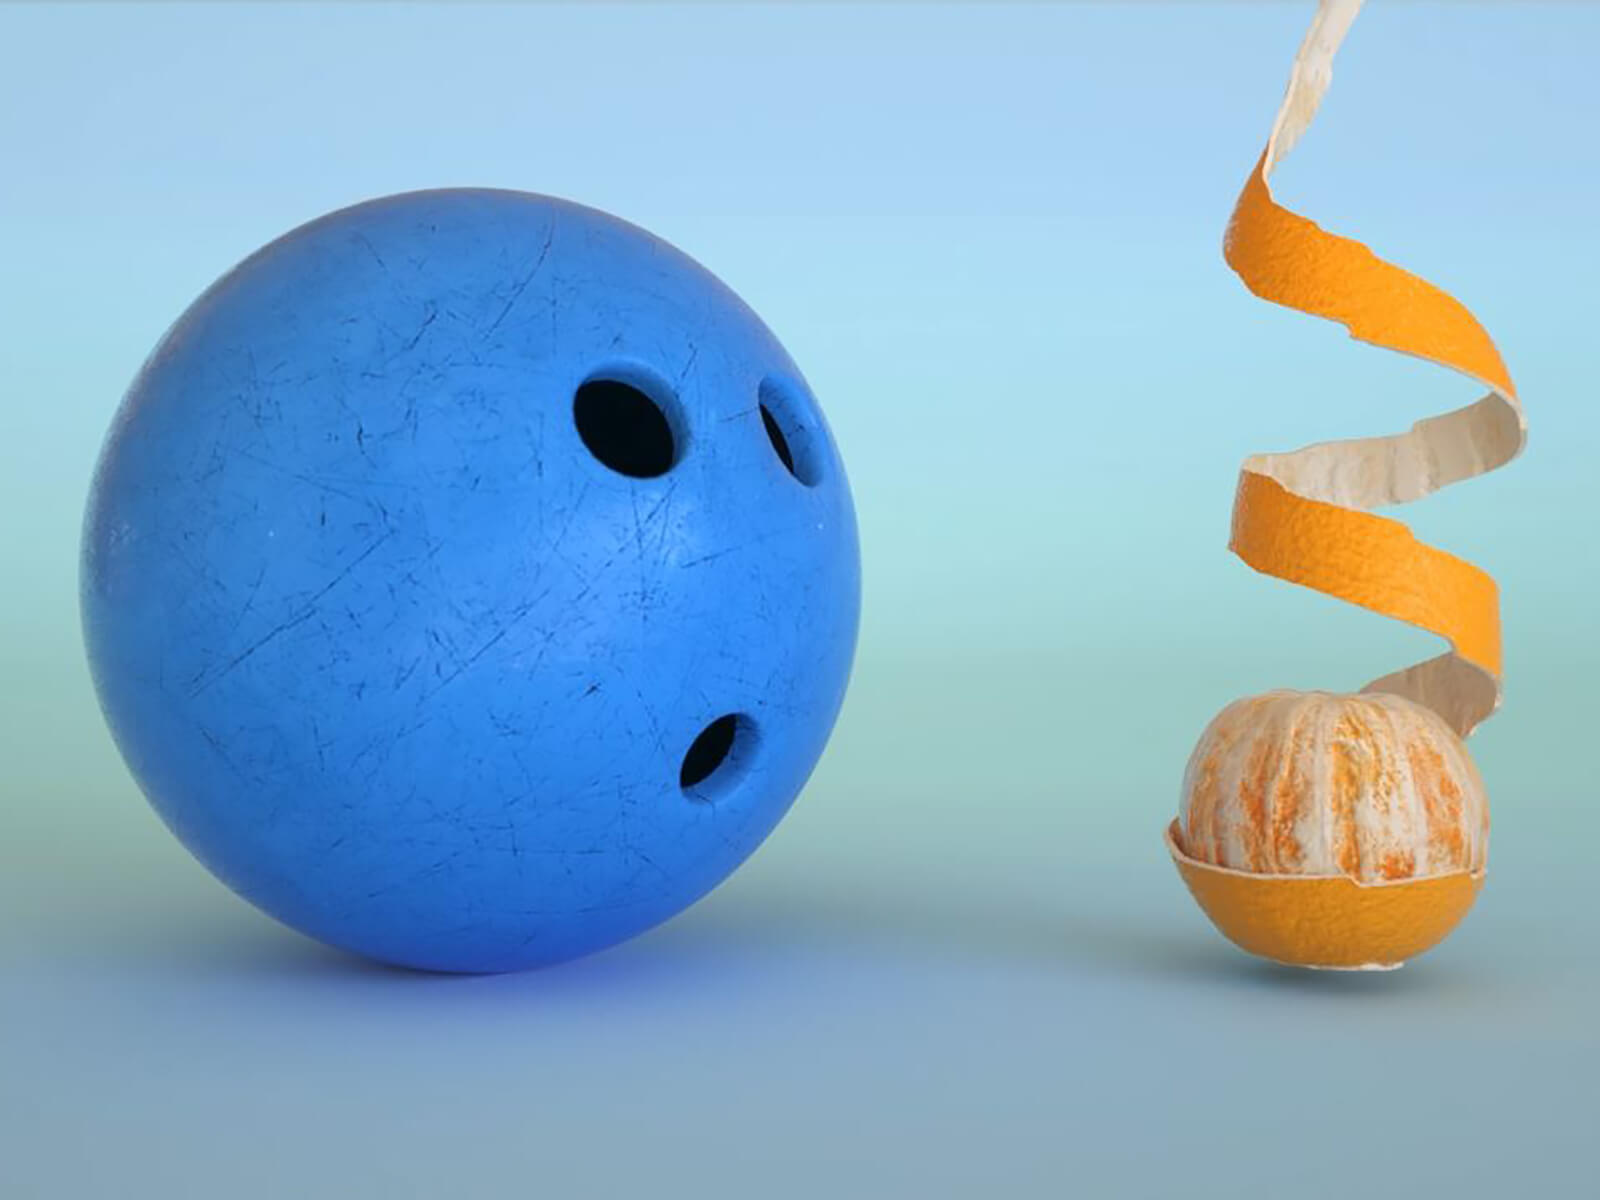 CG image of a bowling ball and peeled orange by Jonathan Bourim and Christophe Bouchard.